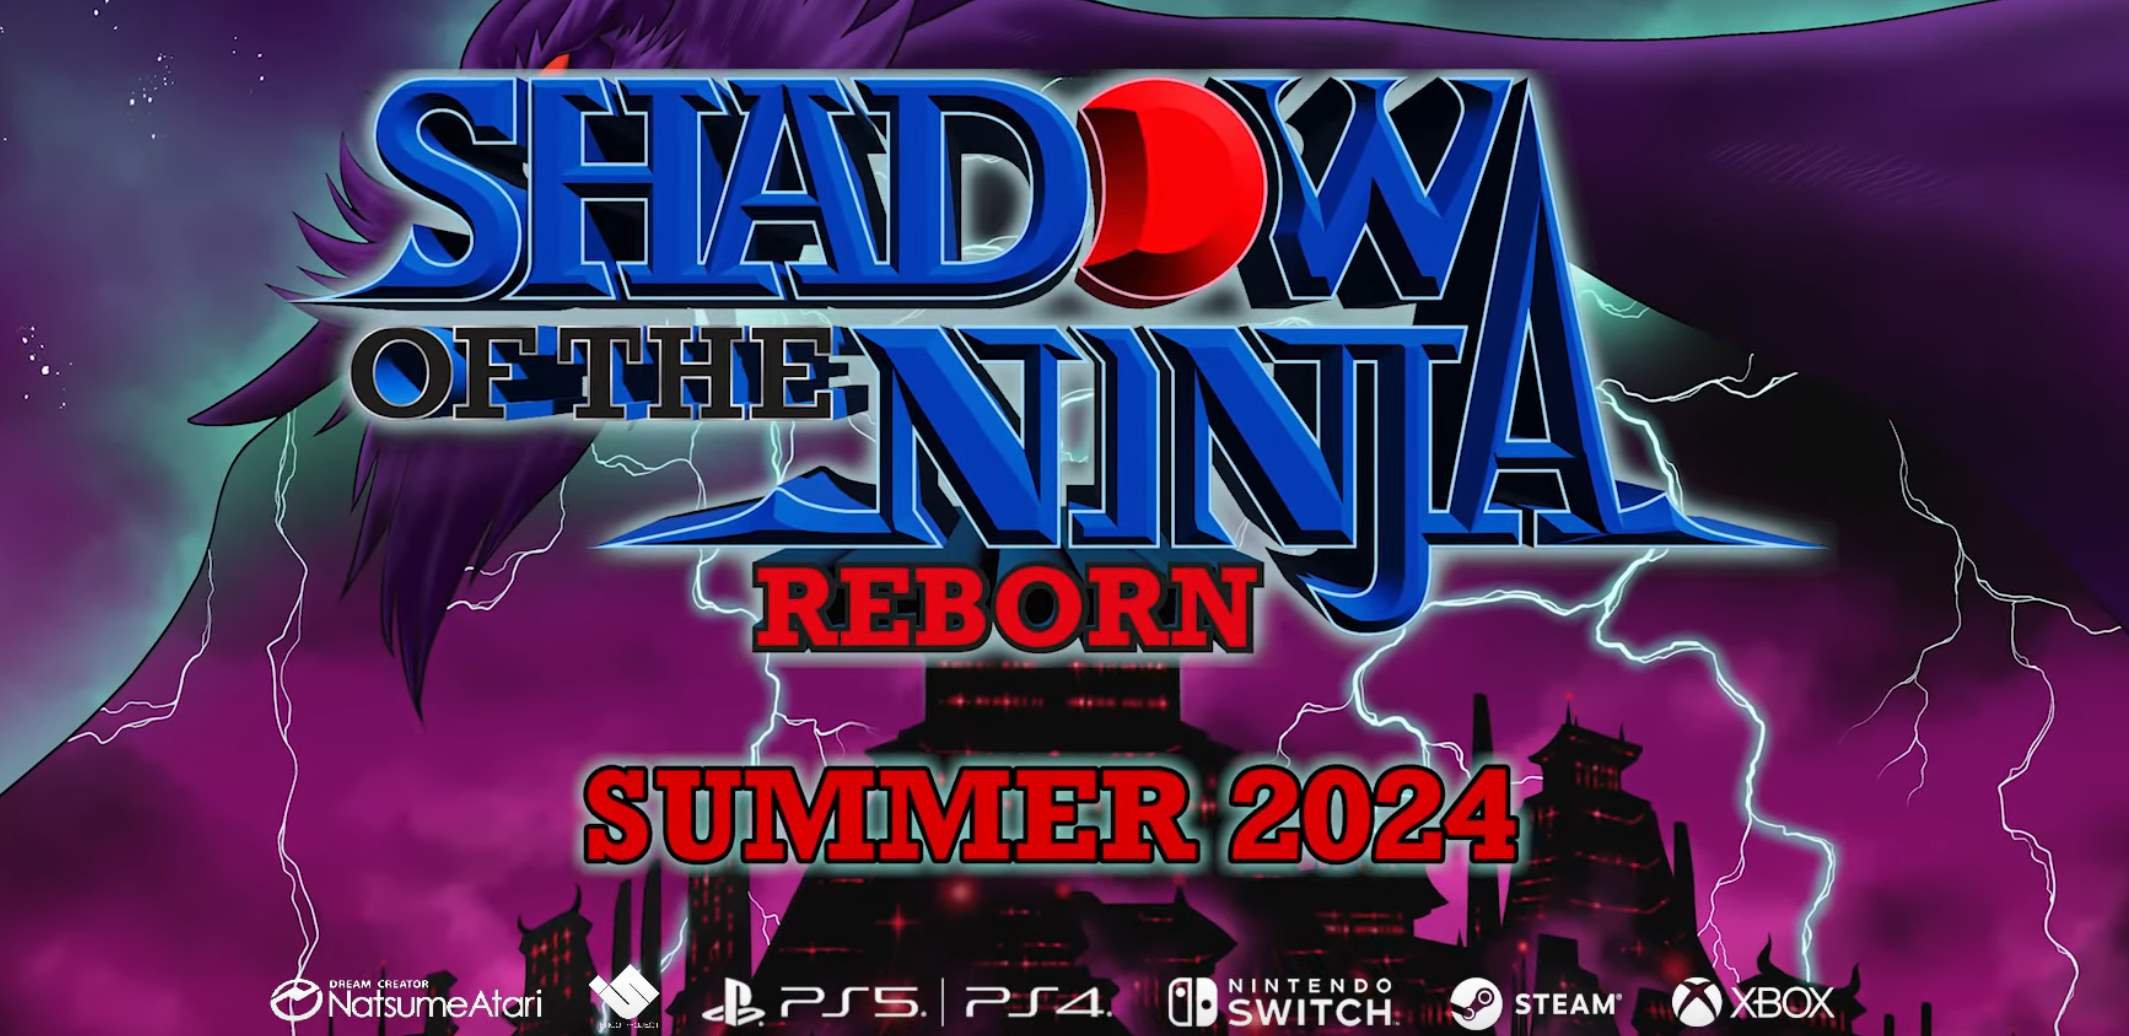 Shadow of the Ninja - Reborn Trailer